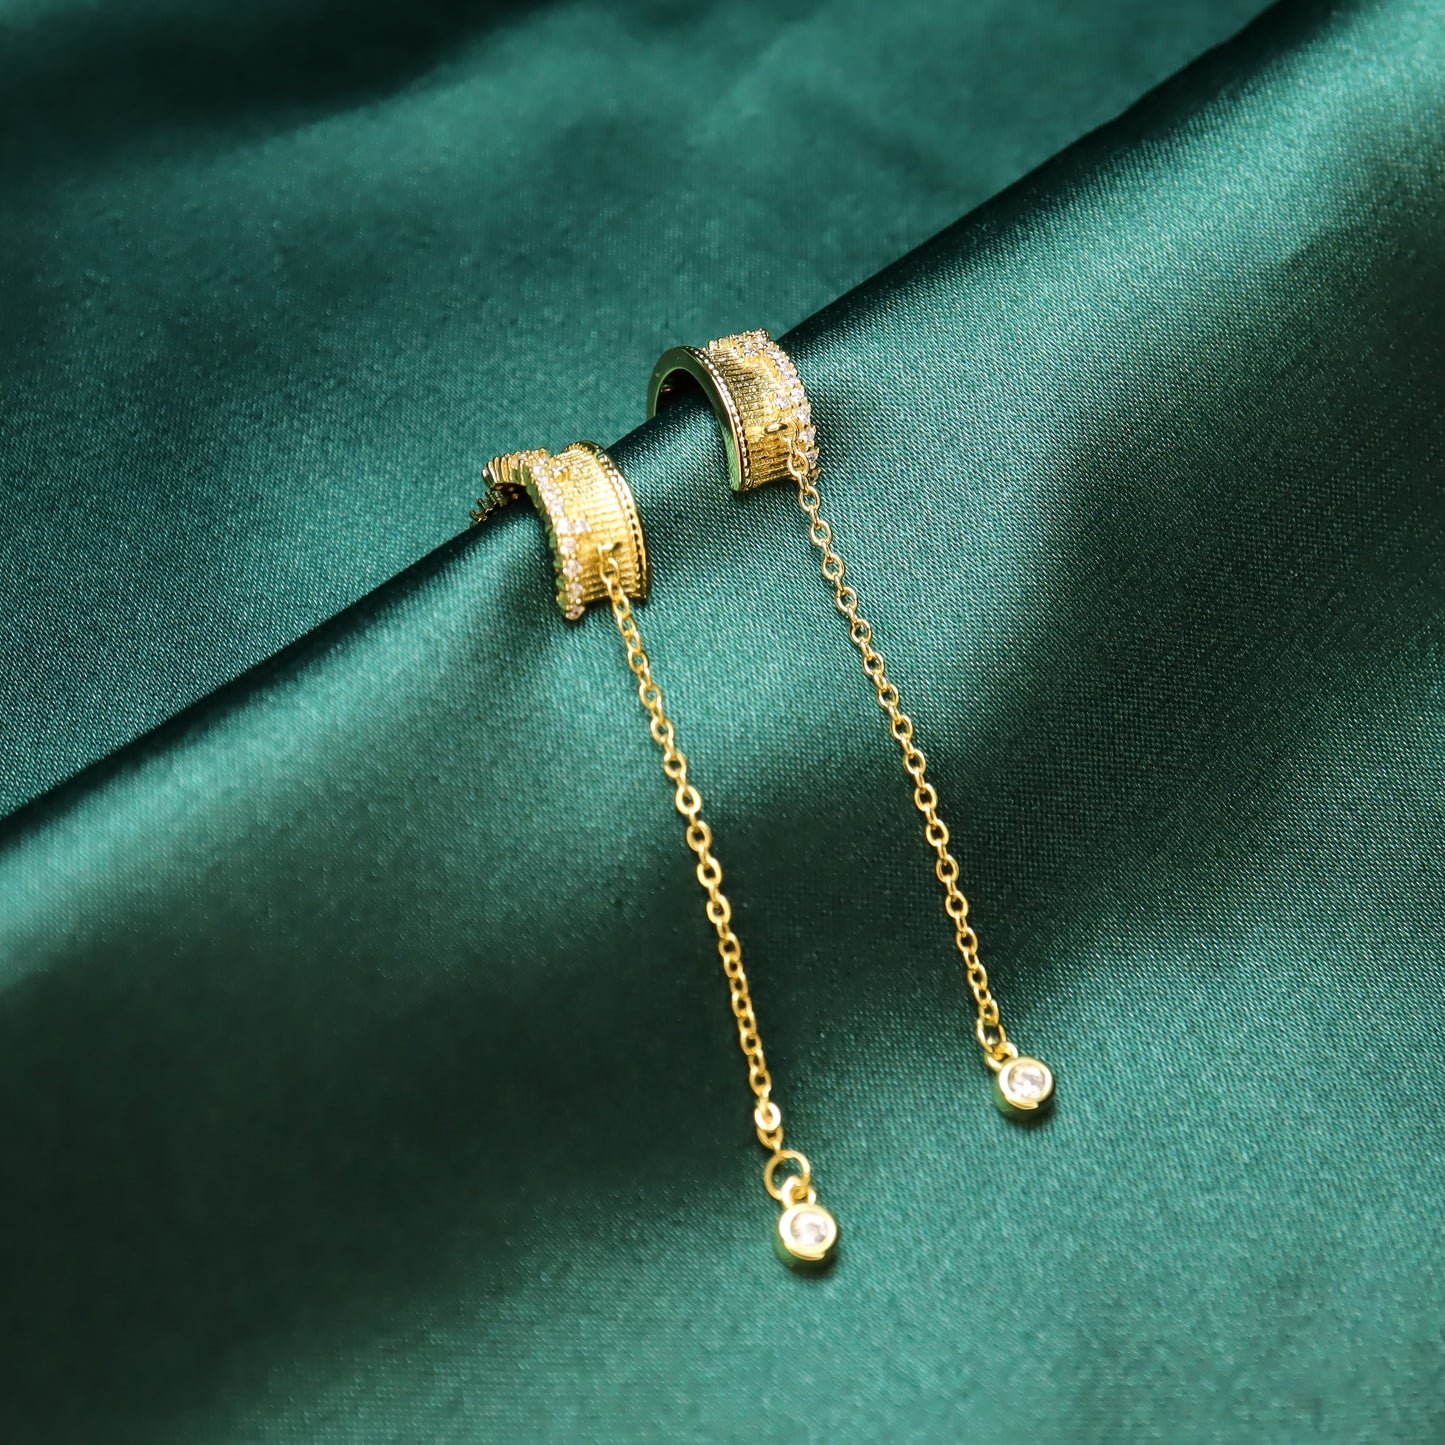 Starry Crown - 18K Gold Plated S925 Sterling Silver Vintage Tassel Earrings